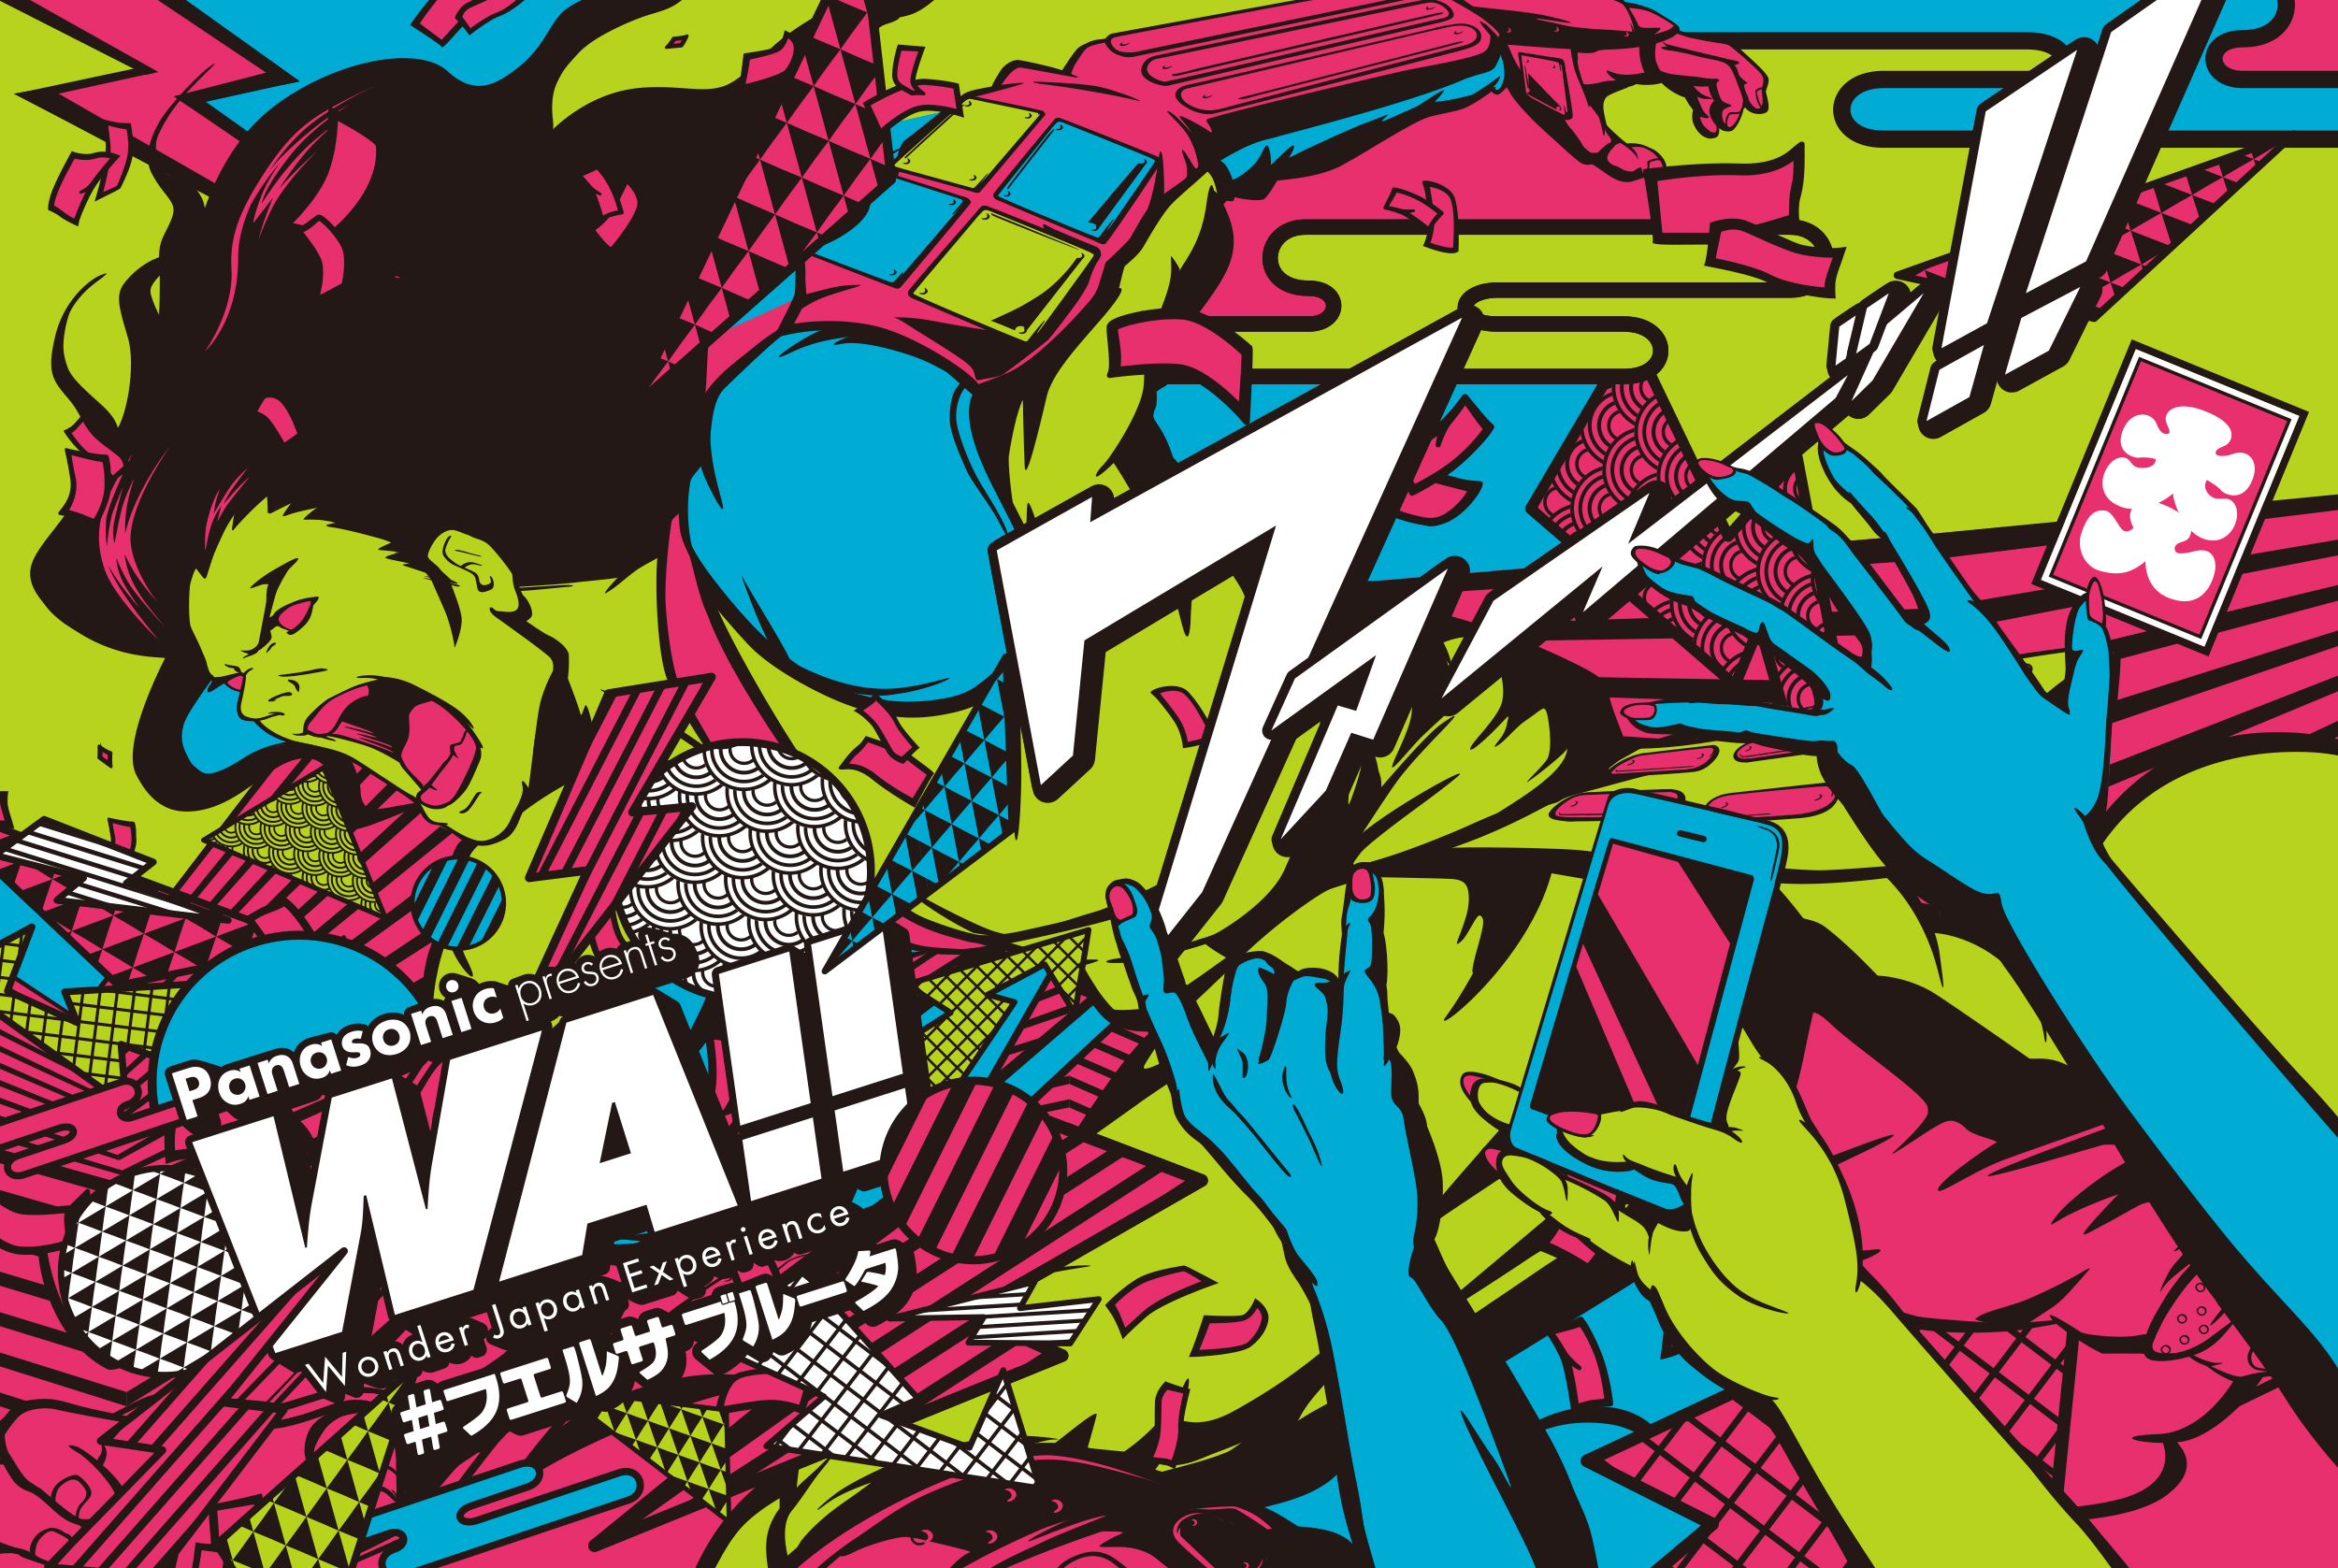 FUERZA BRUTAuPanasonic presents WA !! - Wonder Japan Experiencev BEYOND THE NEXT LEVEL